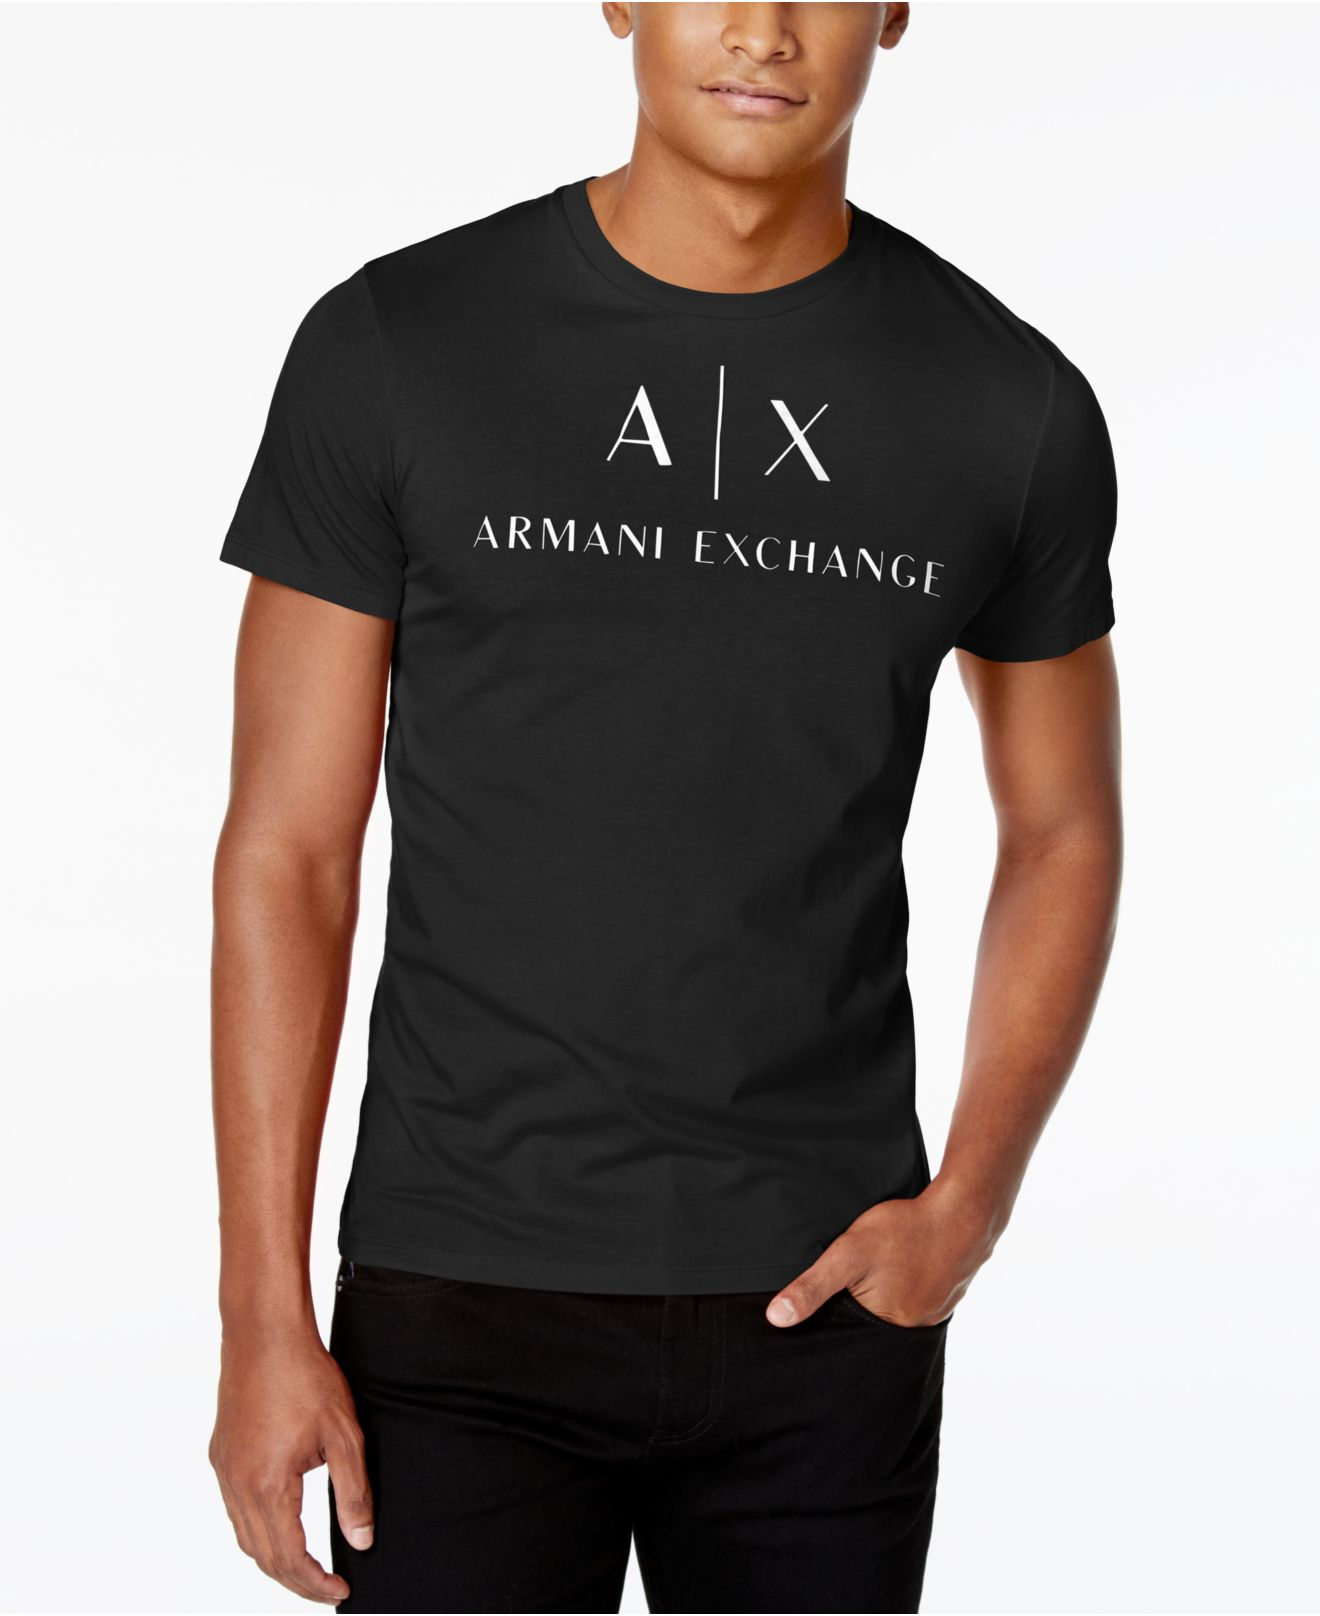 Work like armani exchange t shirts for mens price debs tesco